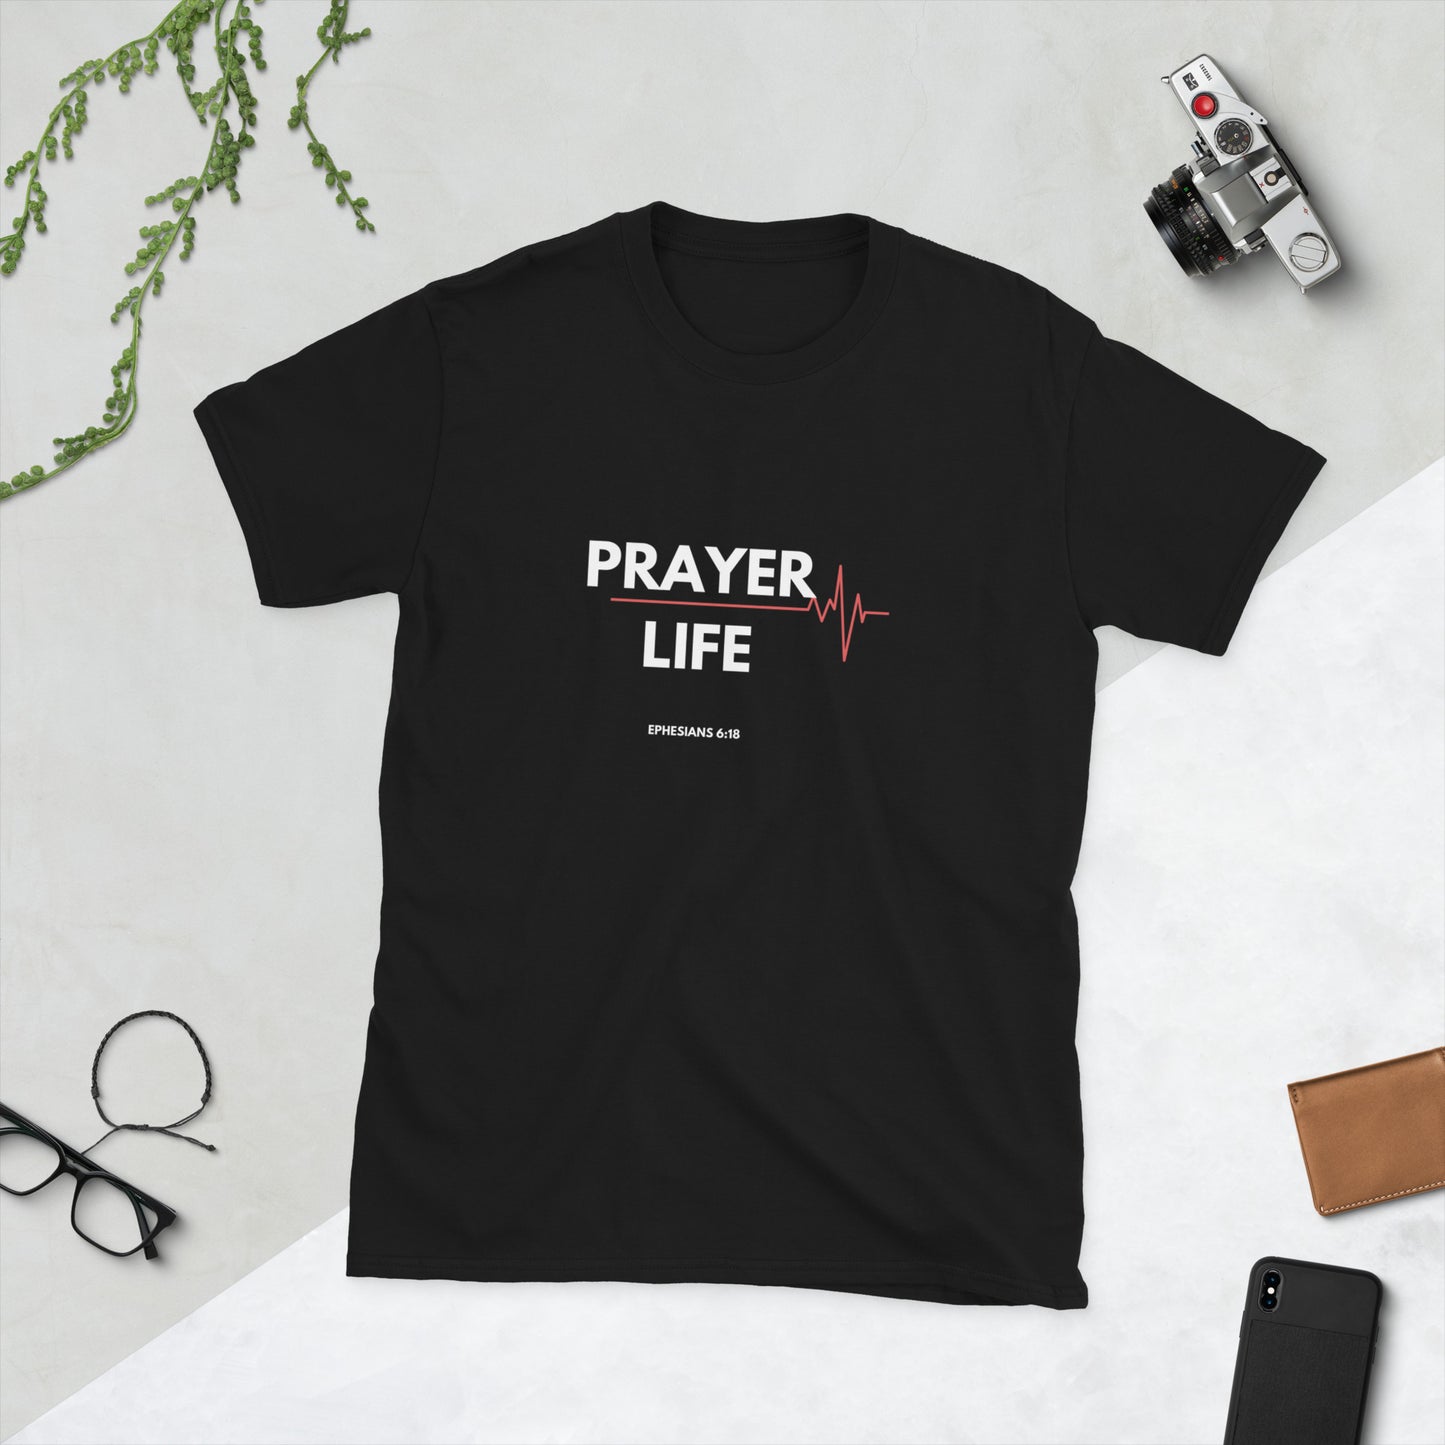 Prayer life